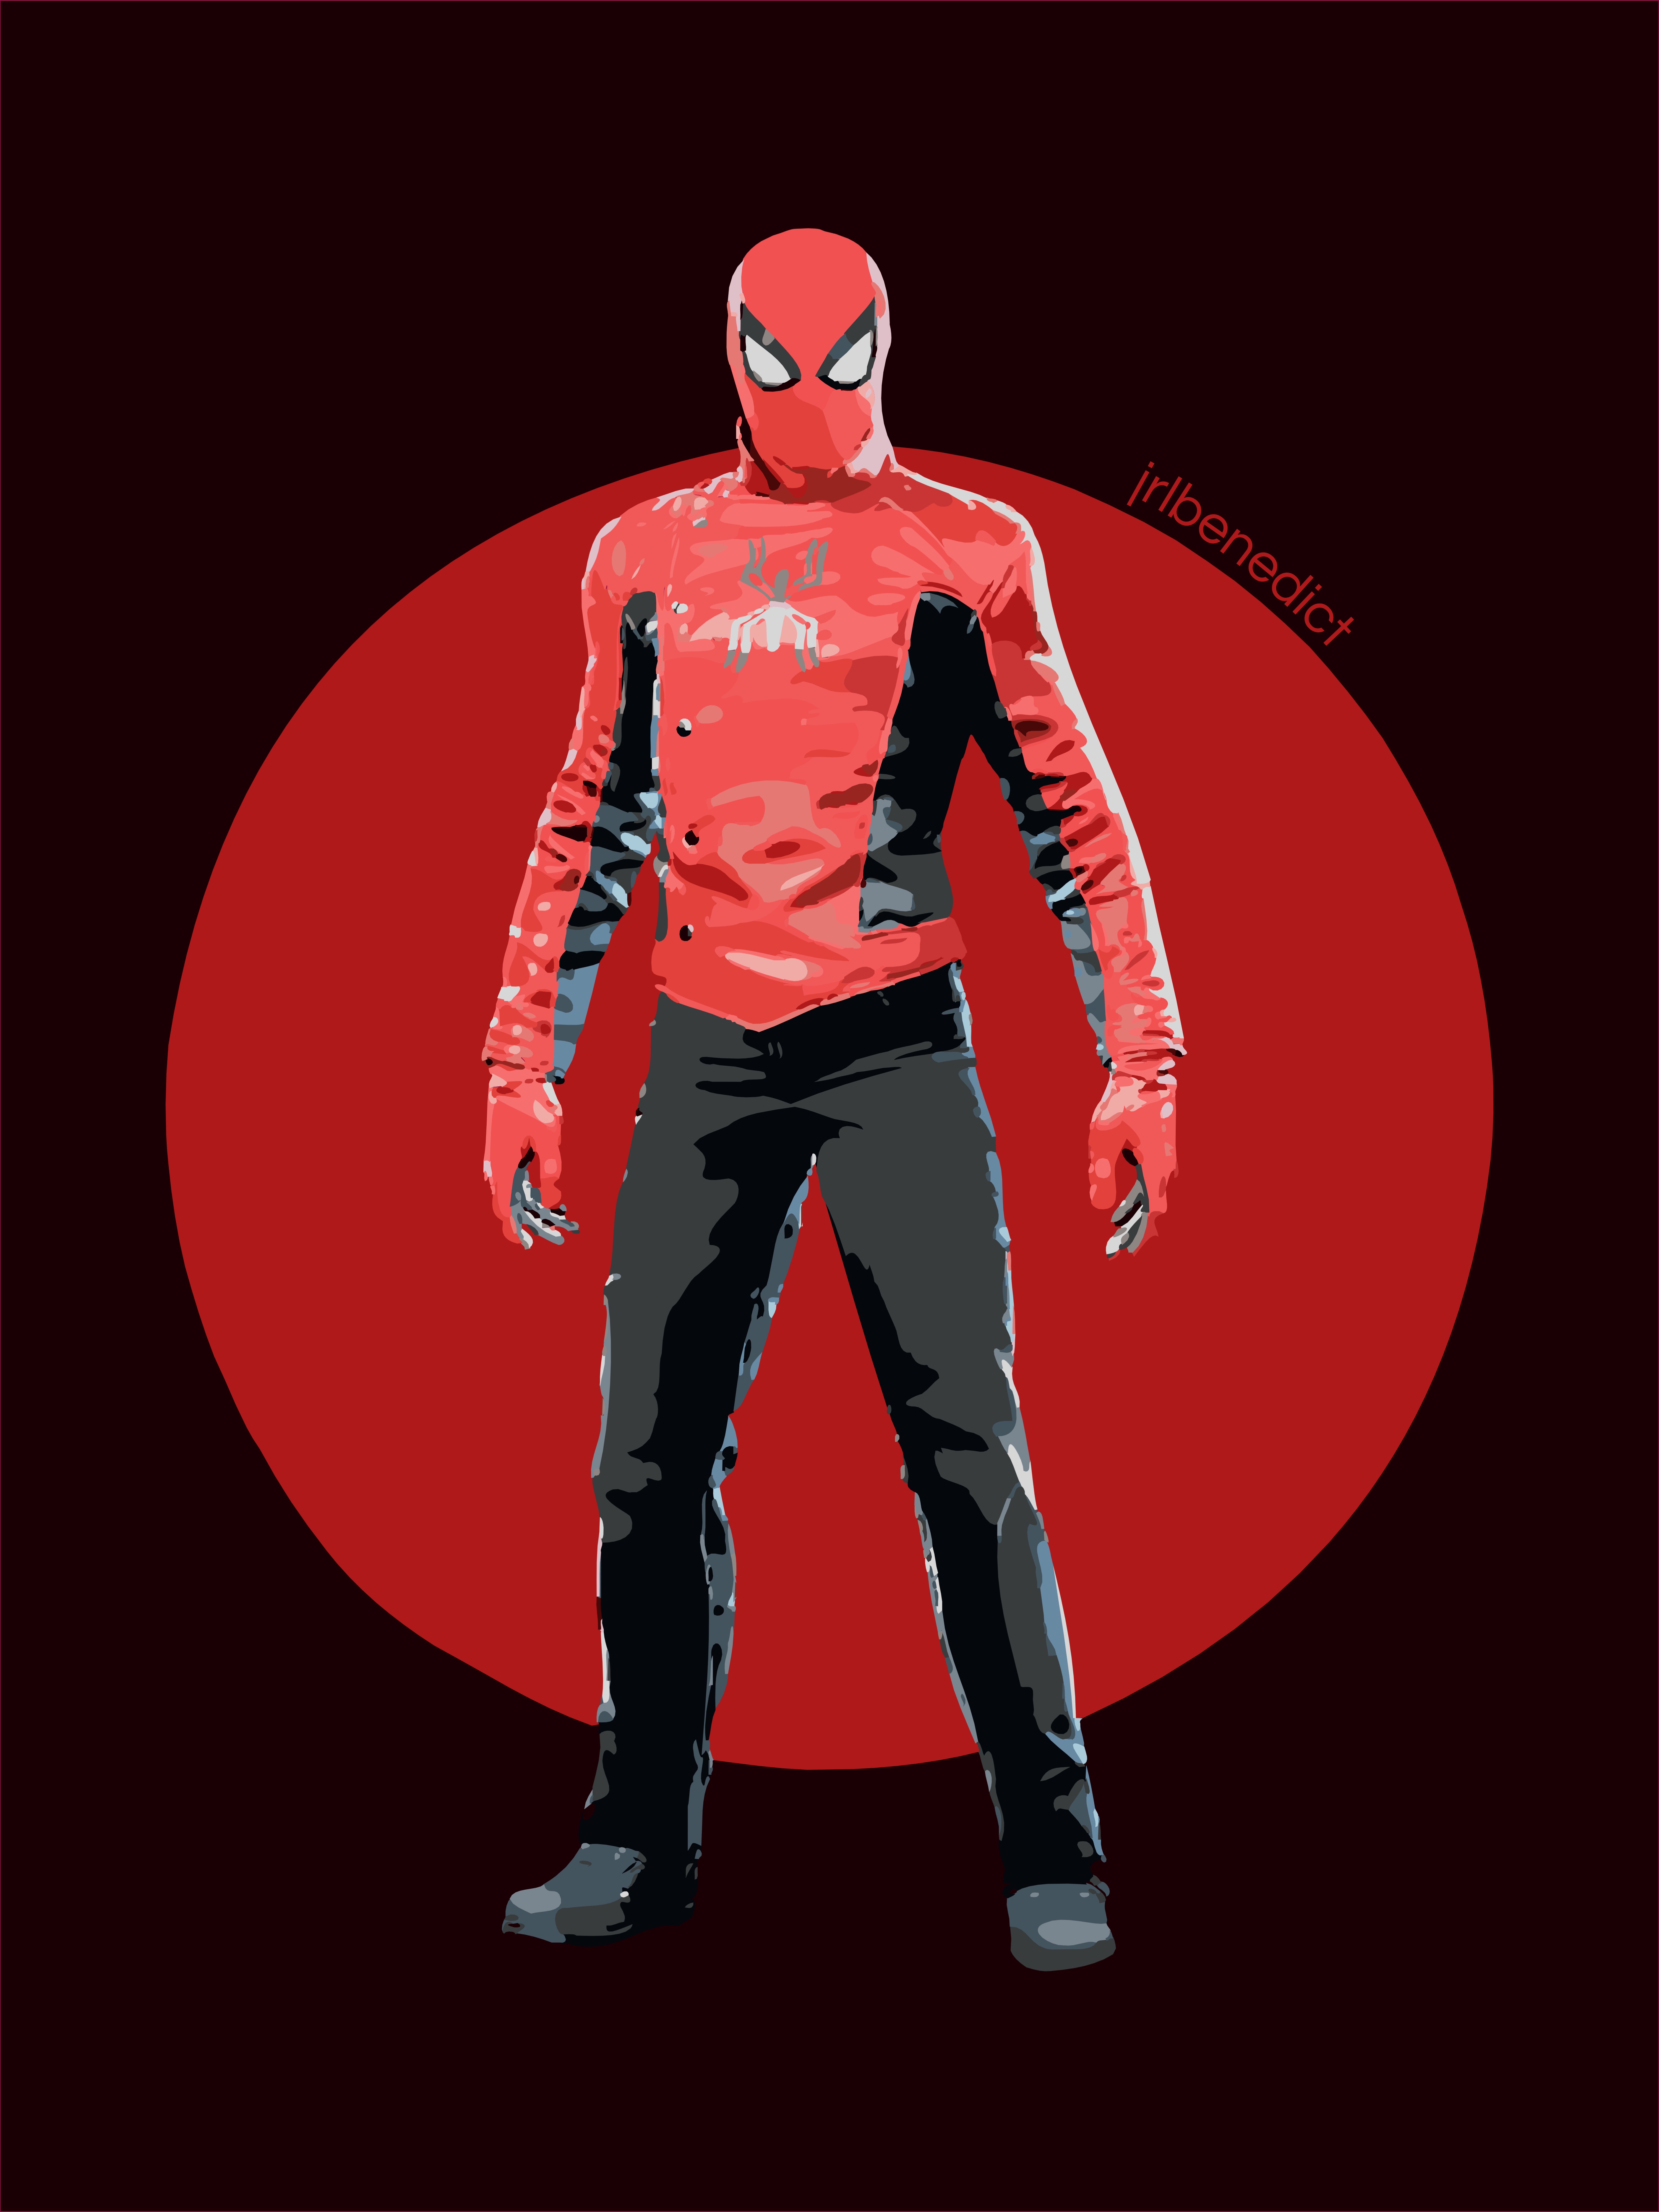 Spider-Man PS4 Last Stand Suit by jrlbenedict on DeviantArt